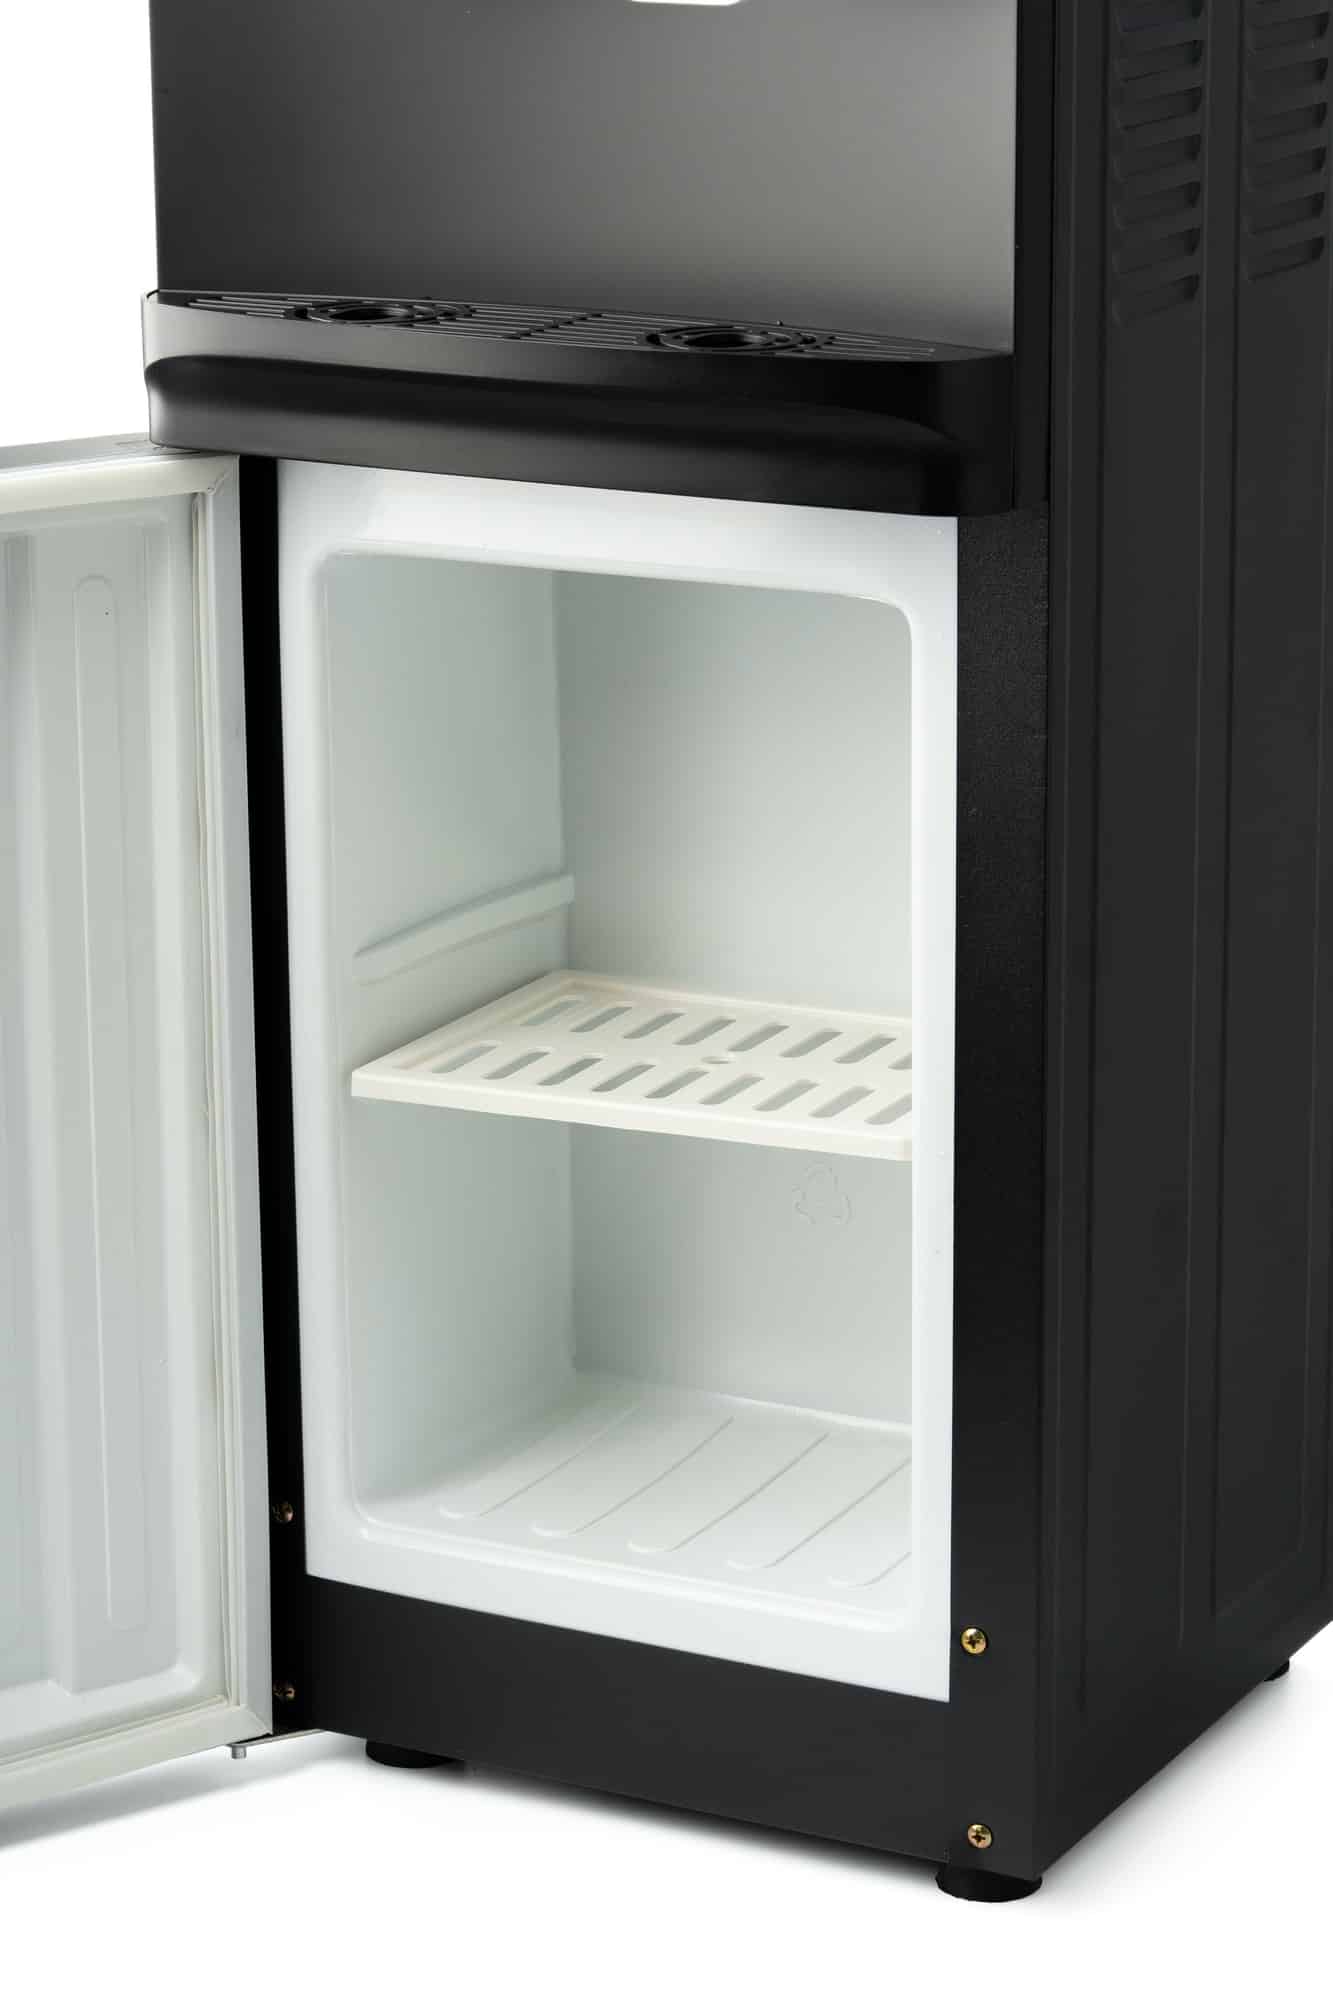 Quels sont les avantages d’utiliser un mini frigo ?